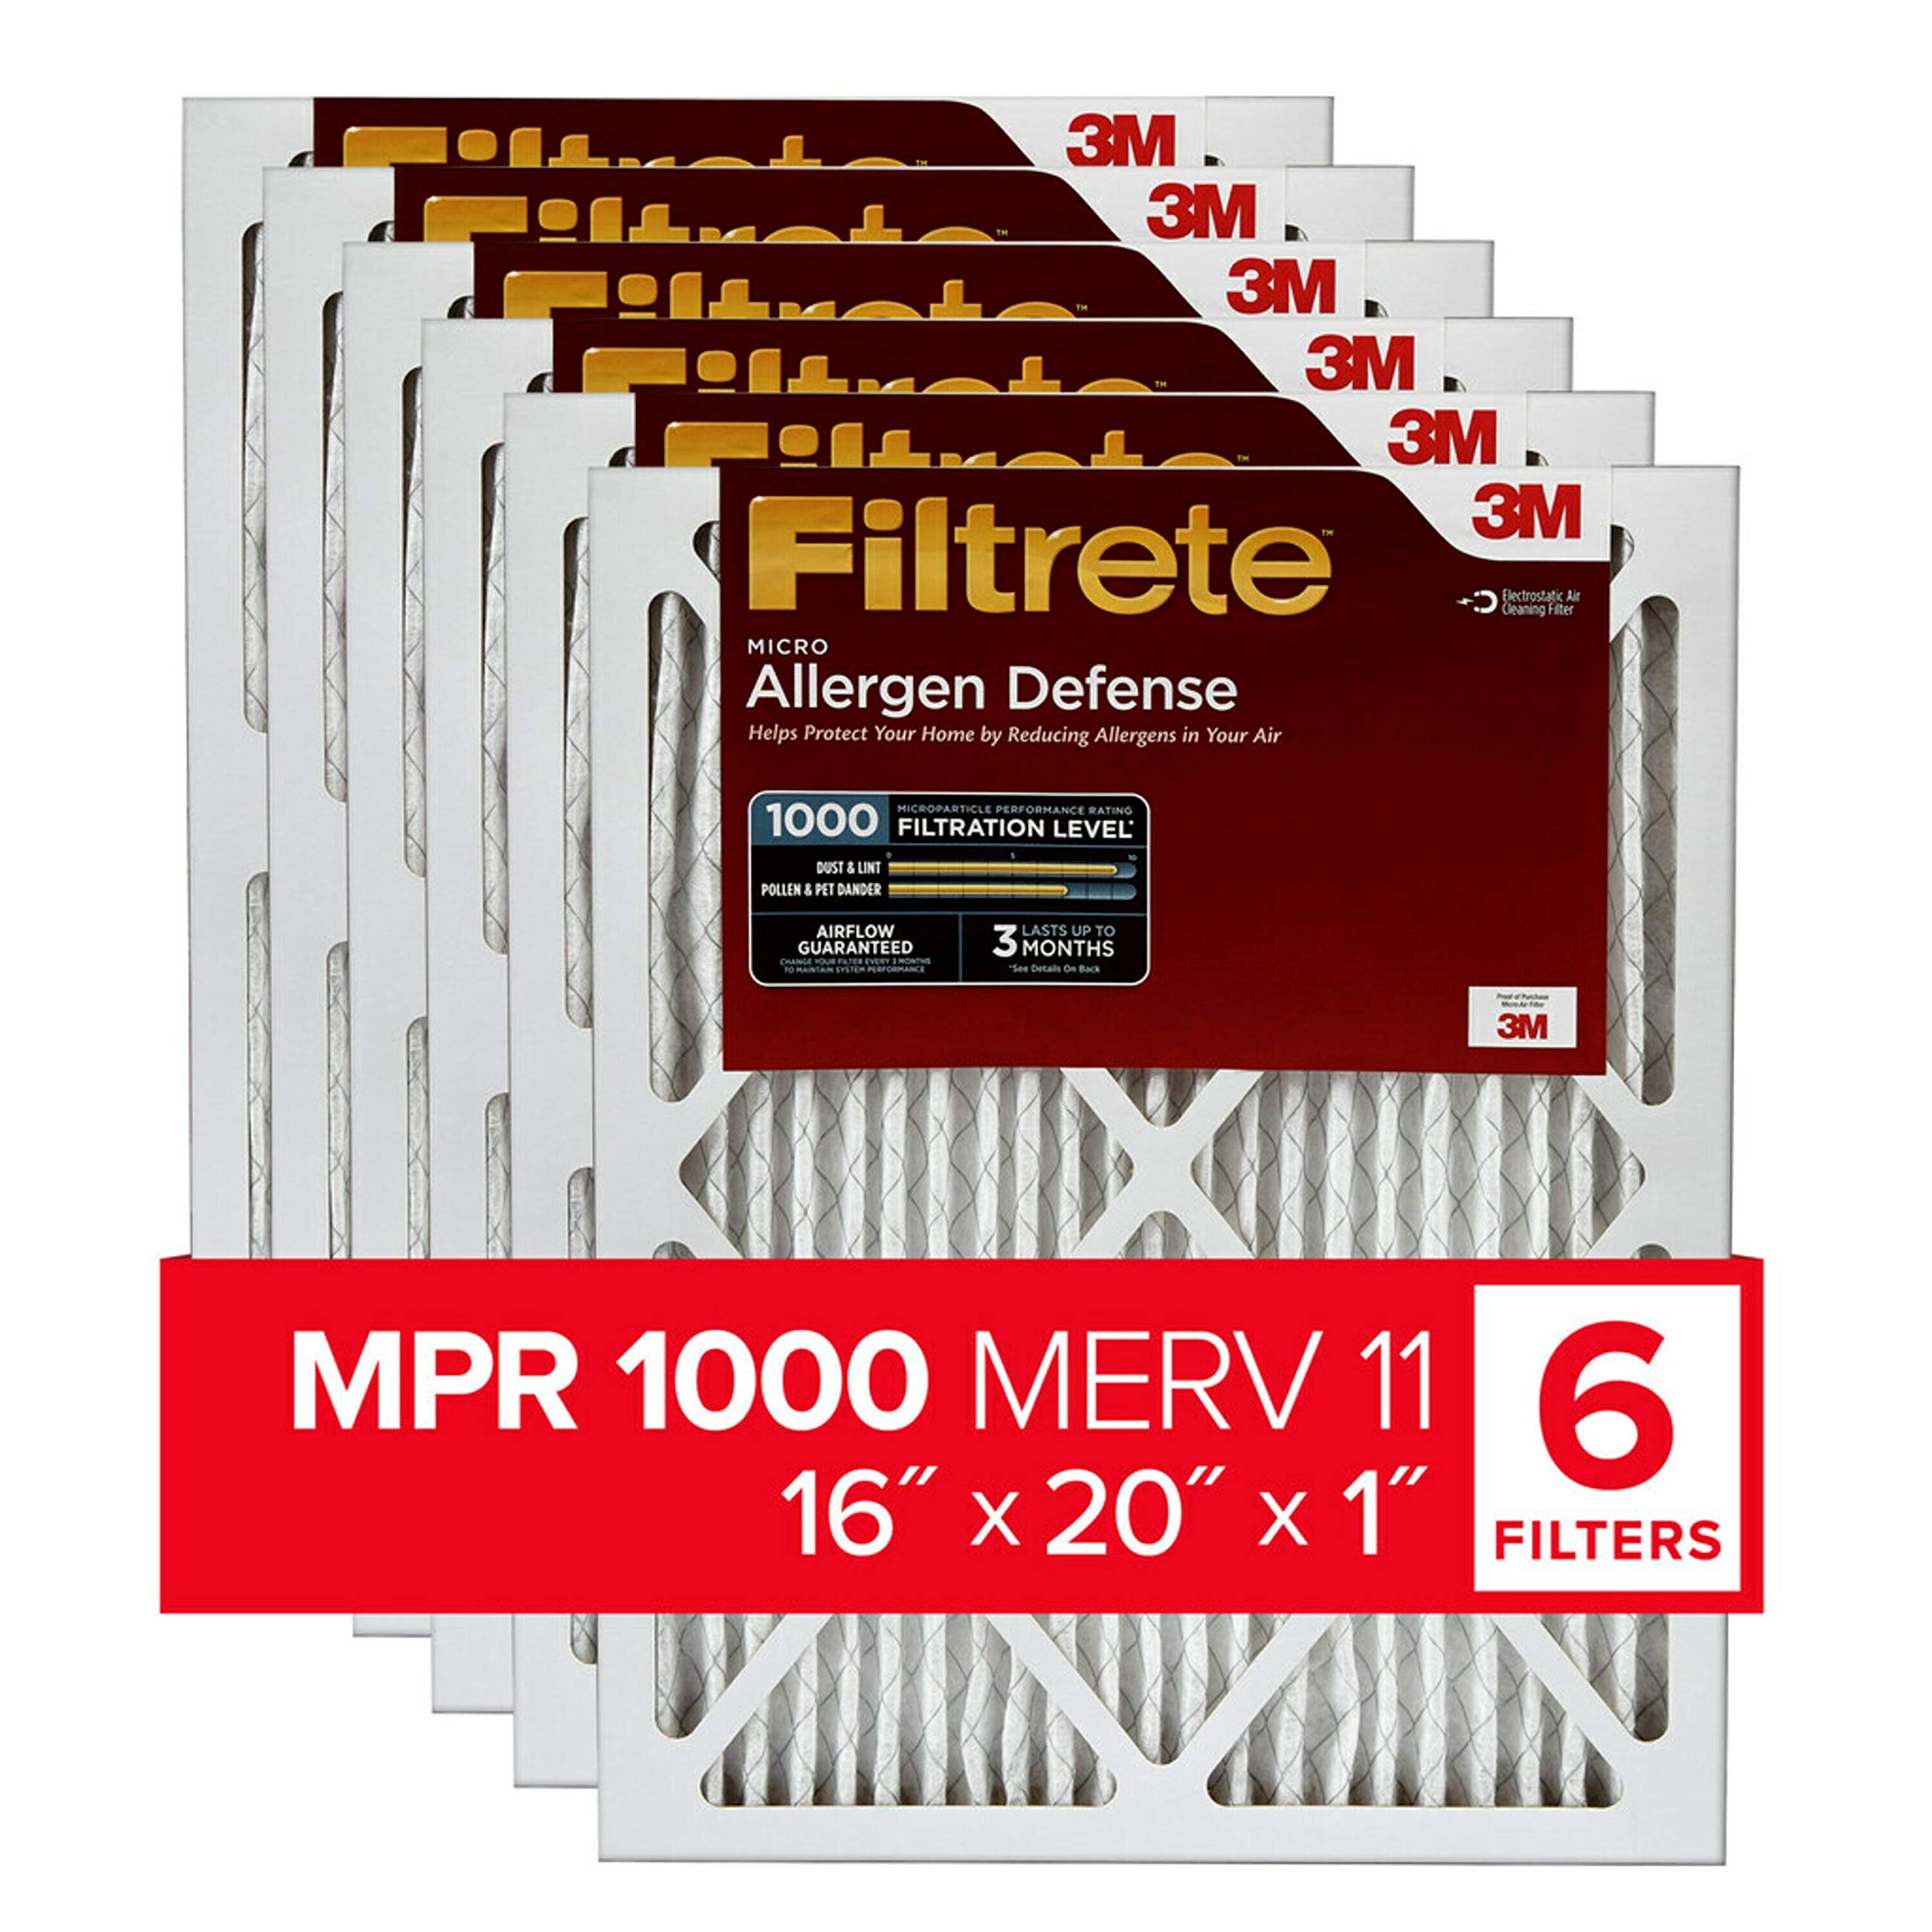 Filtrete 16x20x1 エアフィルター MPR 1000 MERV 11、アレルゲン防御、6 個パック (正確な寸法 15.69x19.69x0.81)